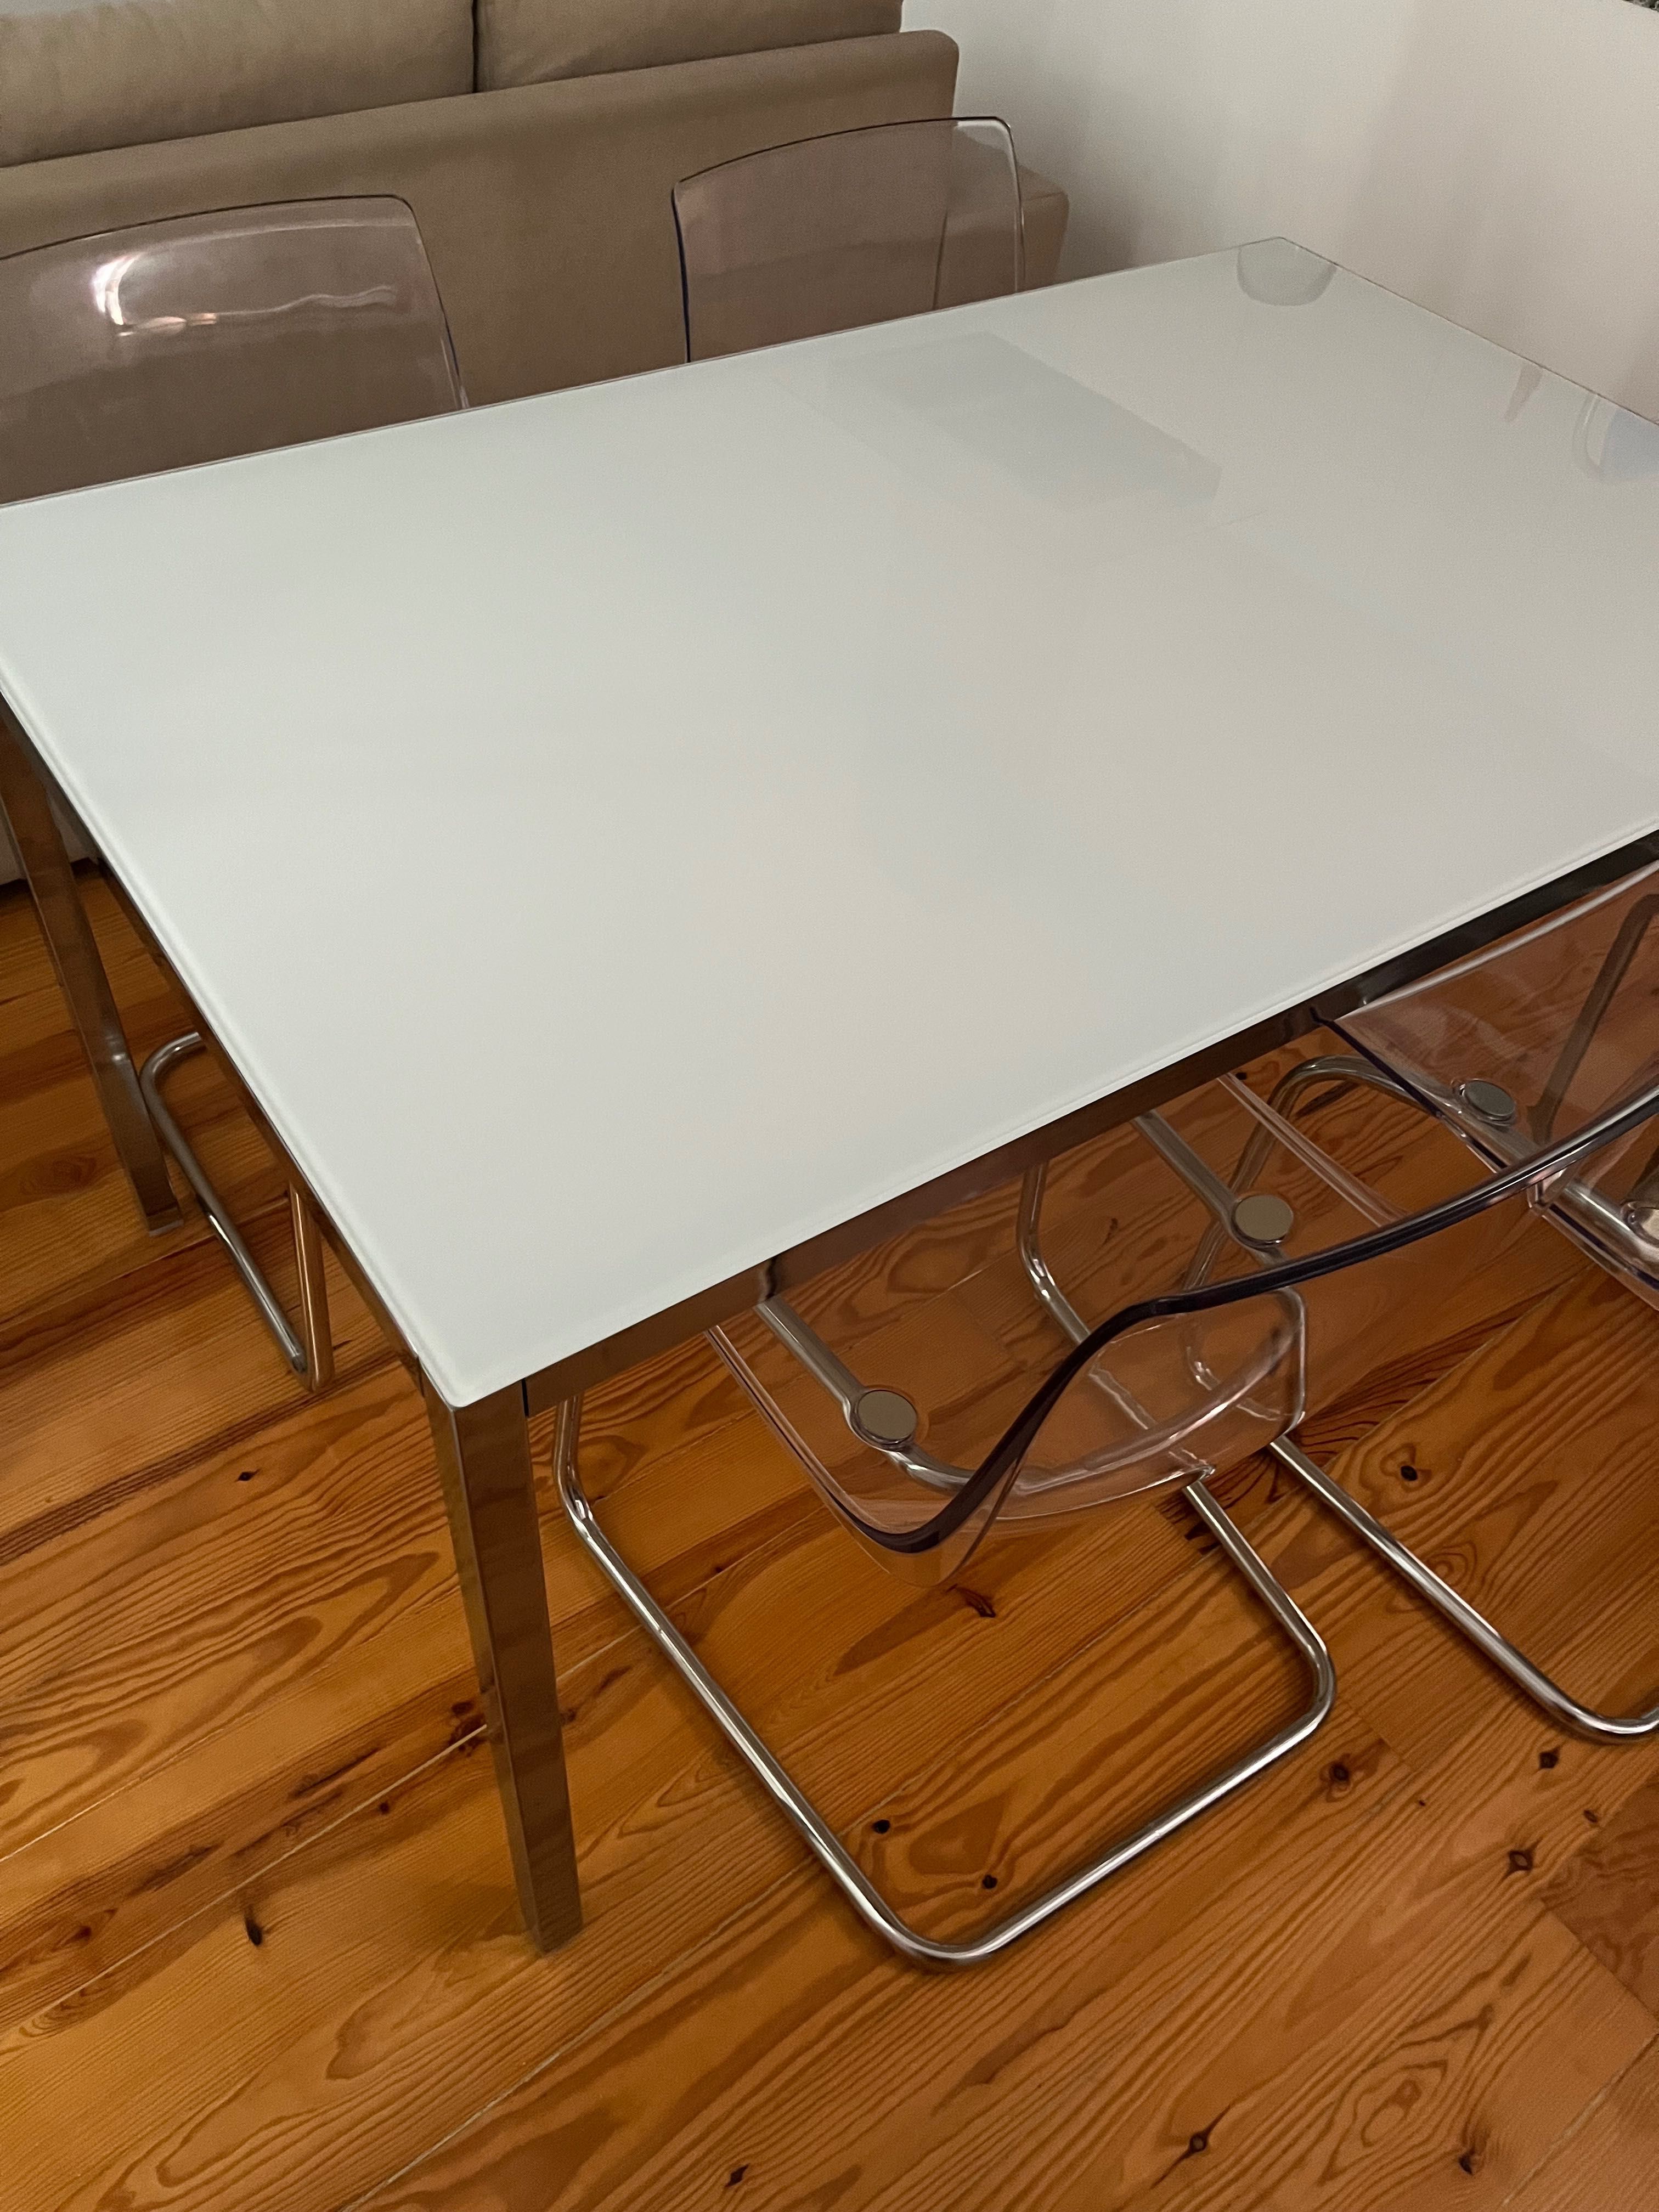 Mesa, cromado/branco cerâmica, 135x85 cm